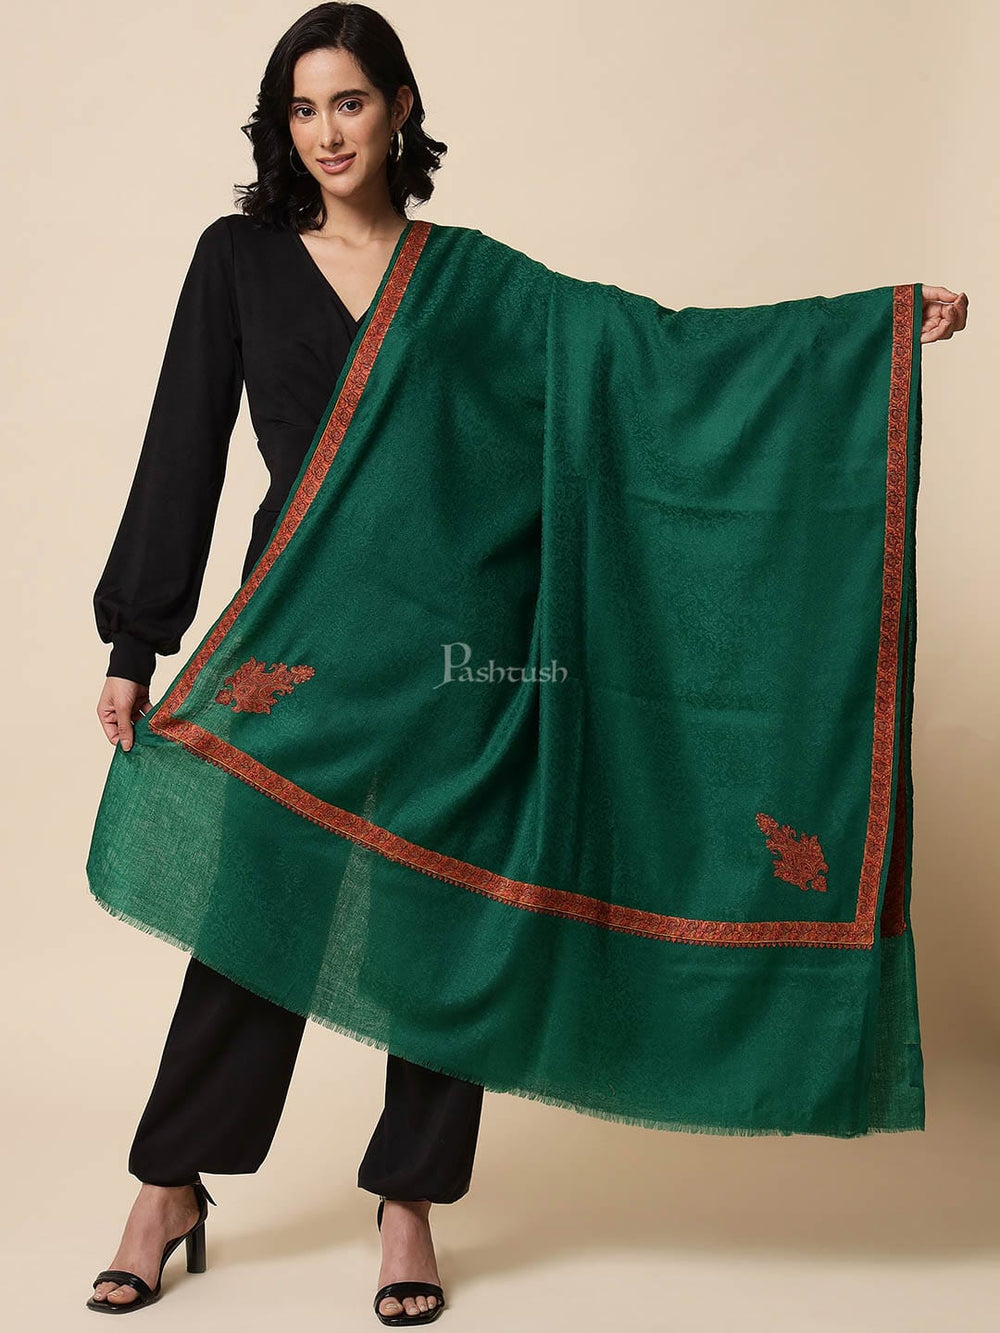 Pashtush India Womens Shawls Pashtush womens Extra Fine Wool shawl, multi kingri embroidery design, Green